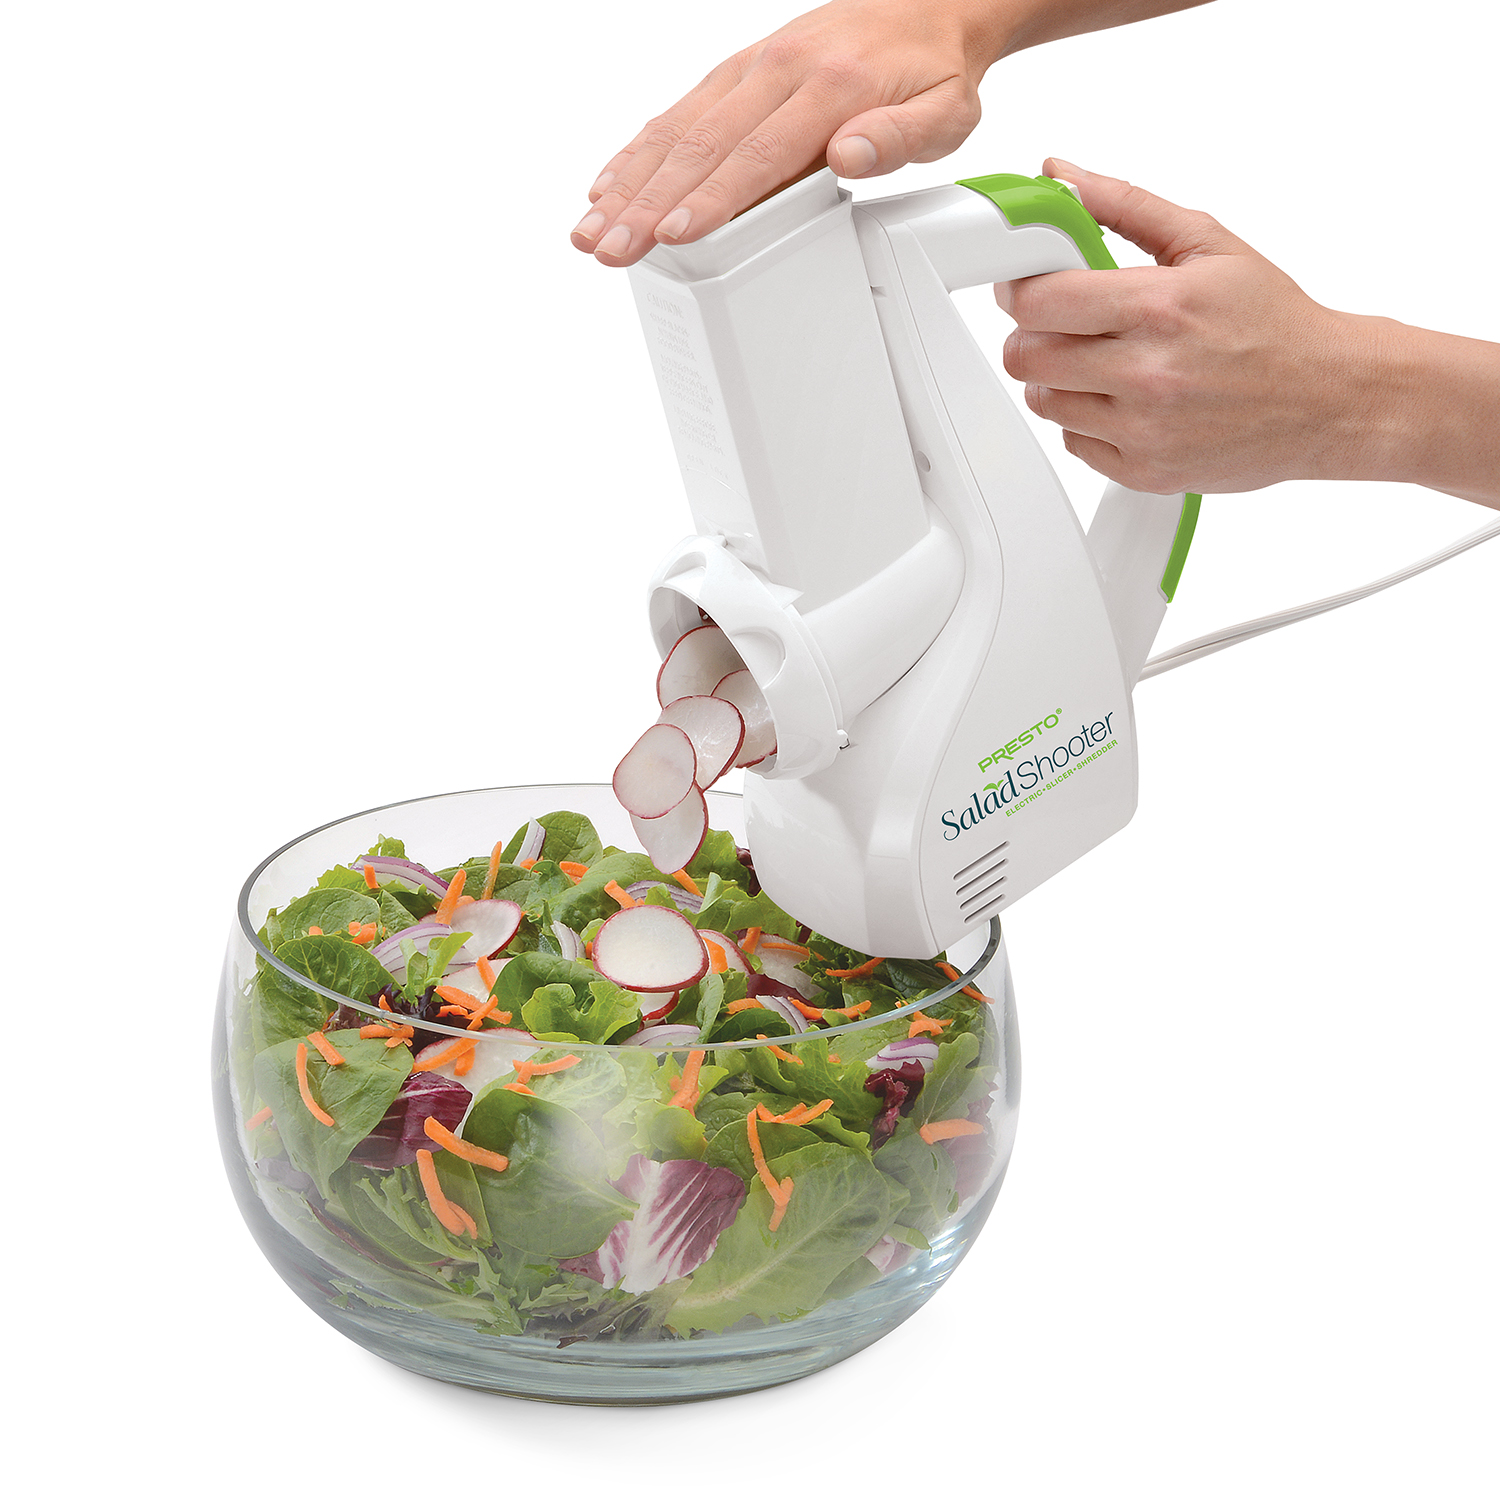 Presto Salad Shooter Electric Slicer 02910, White - image 2 of 5